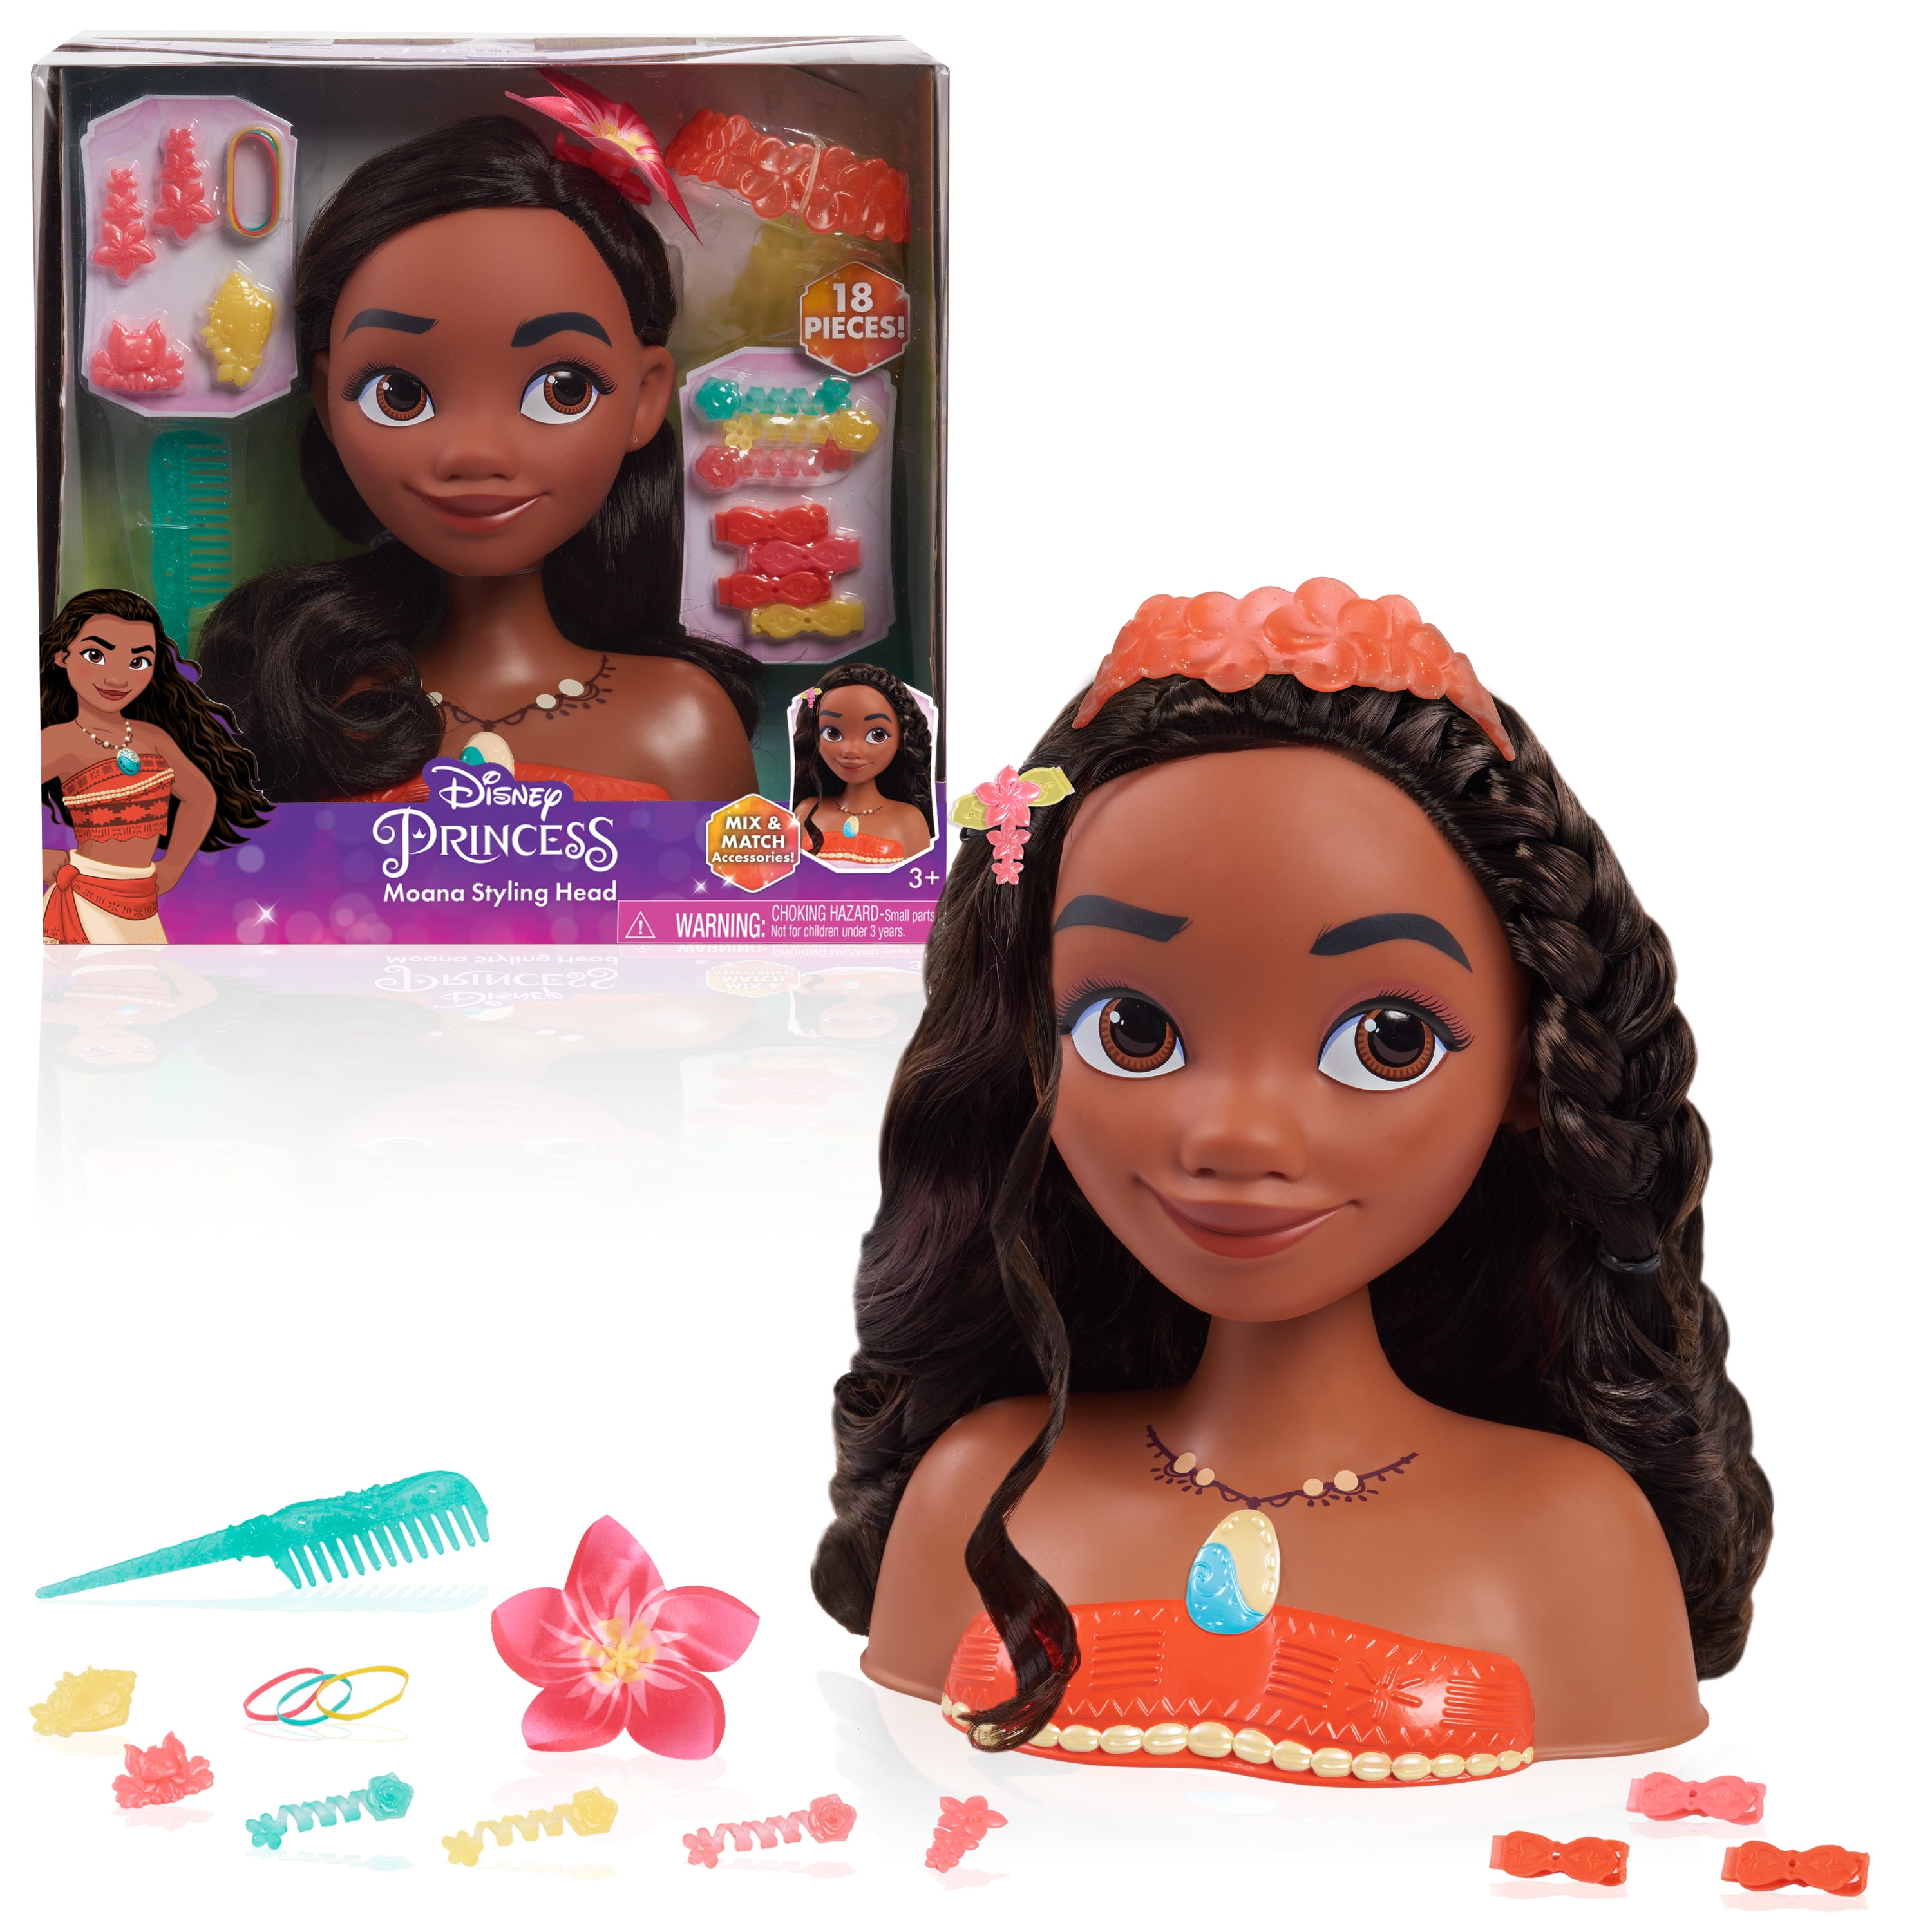 Disney Princess Belle Styling Head, Brown Hair, 10 Piece Pretend